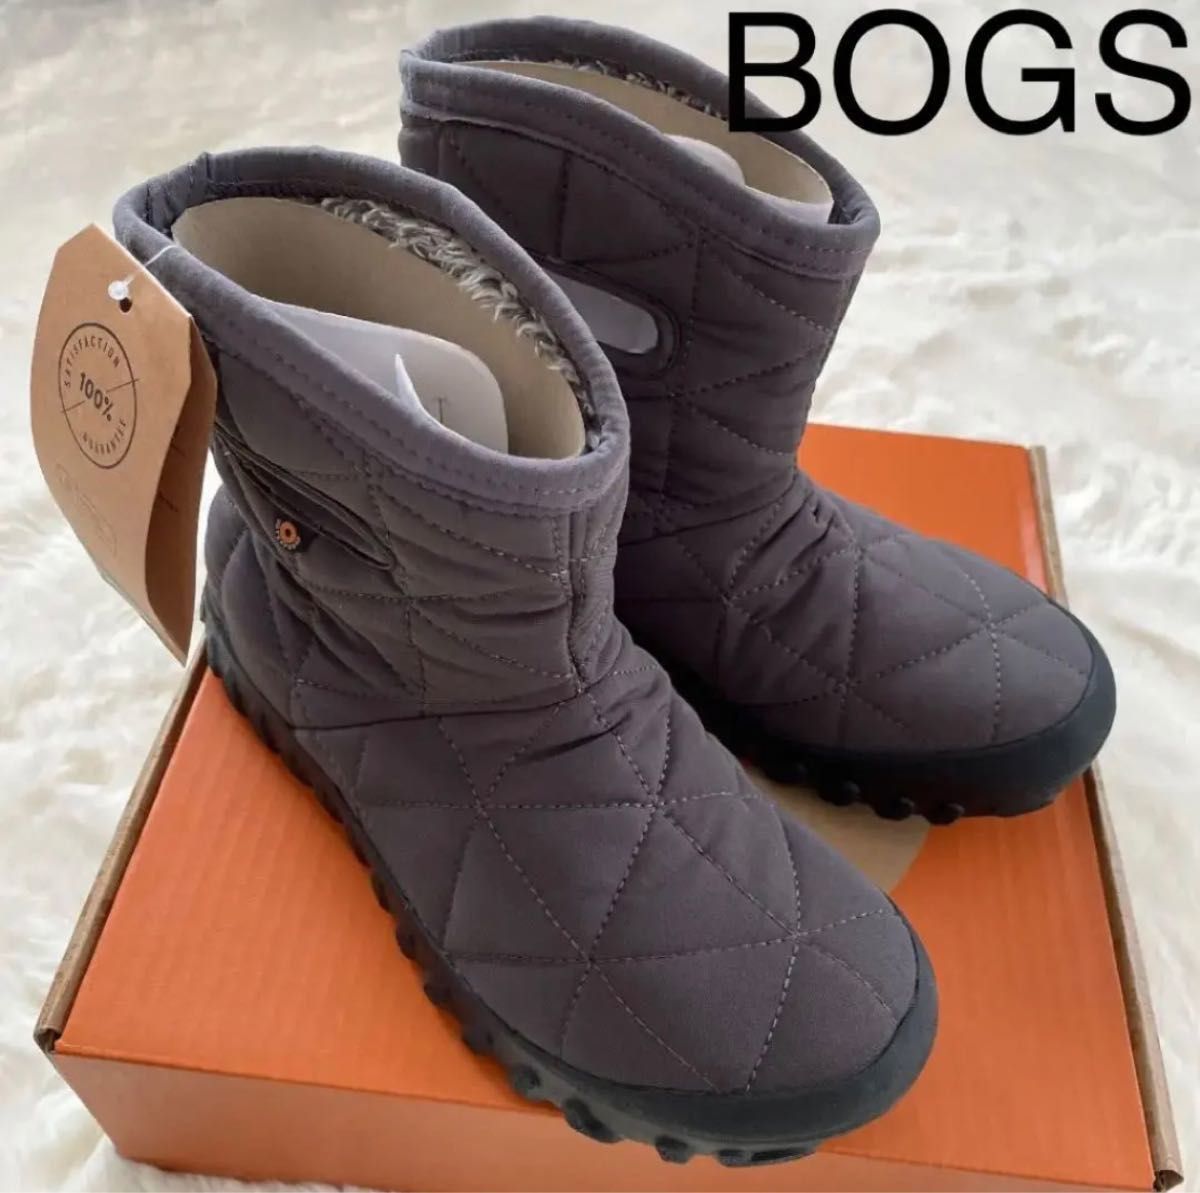 BOGS ボグス スノーブーツ ショート丈 レディース メンズ 防水 防寒 防滑 保温 履きやすい 脱ぎやすい グレー 25cm